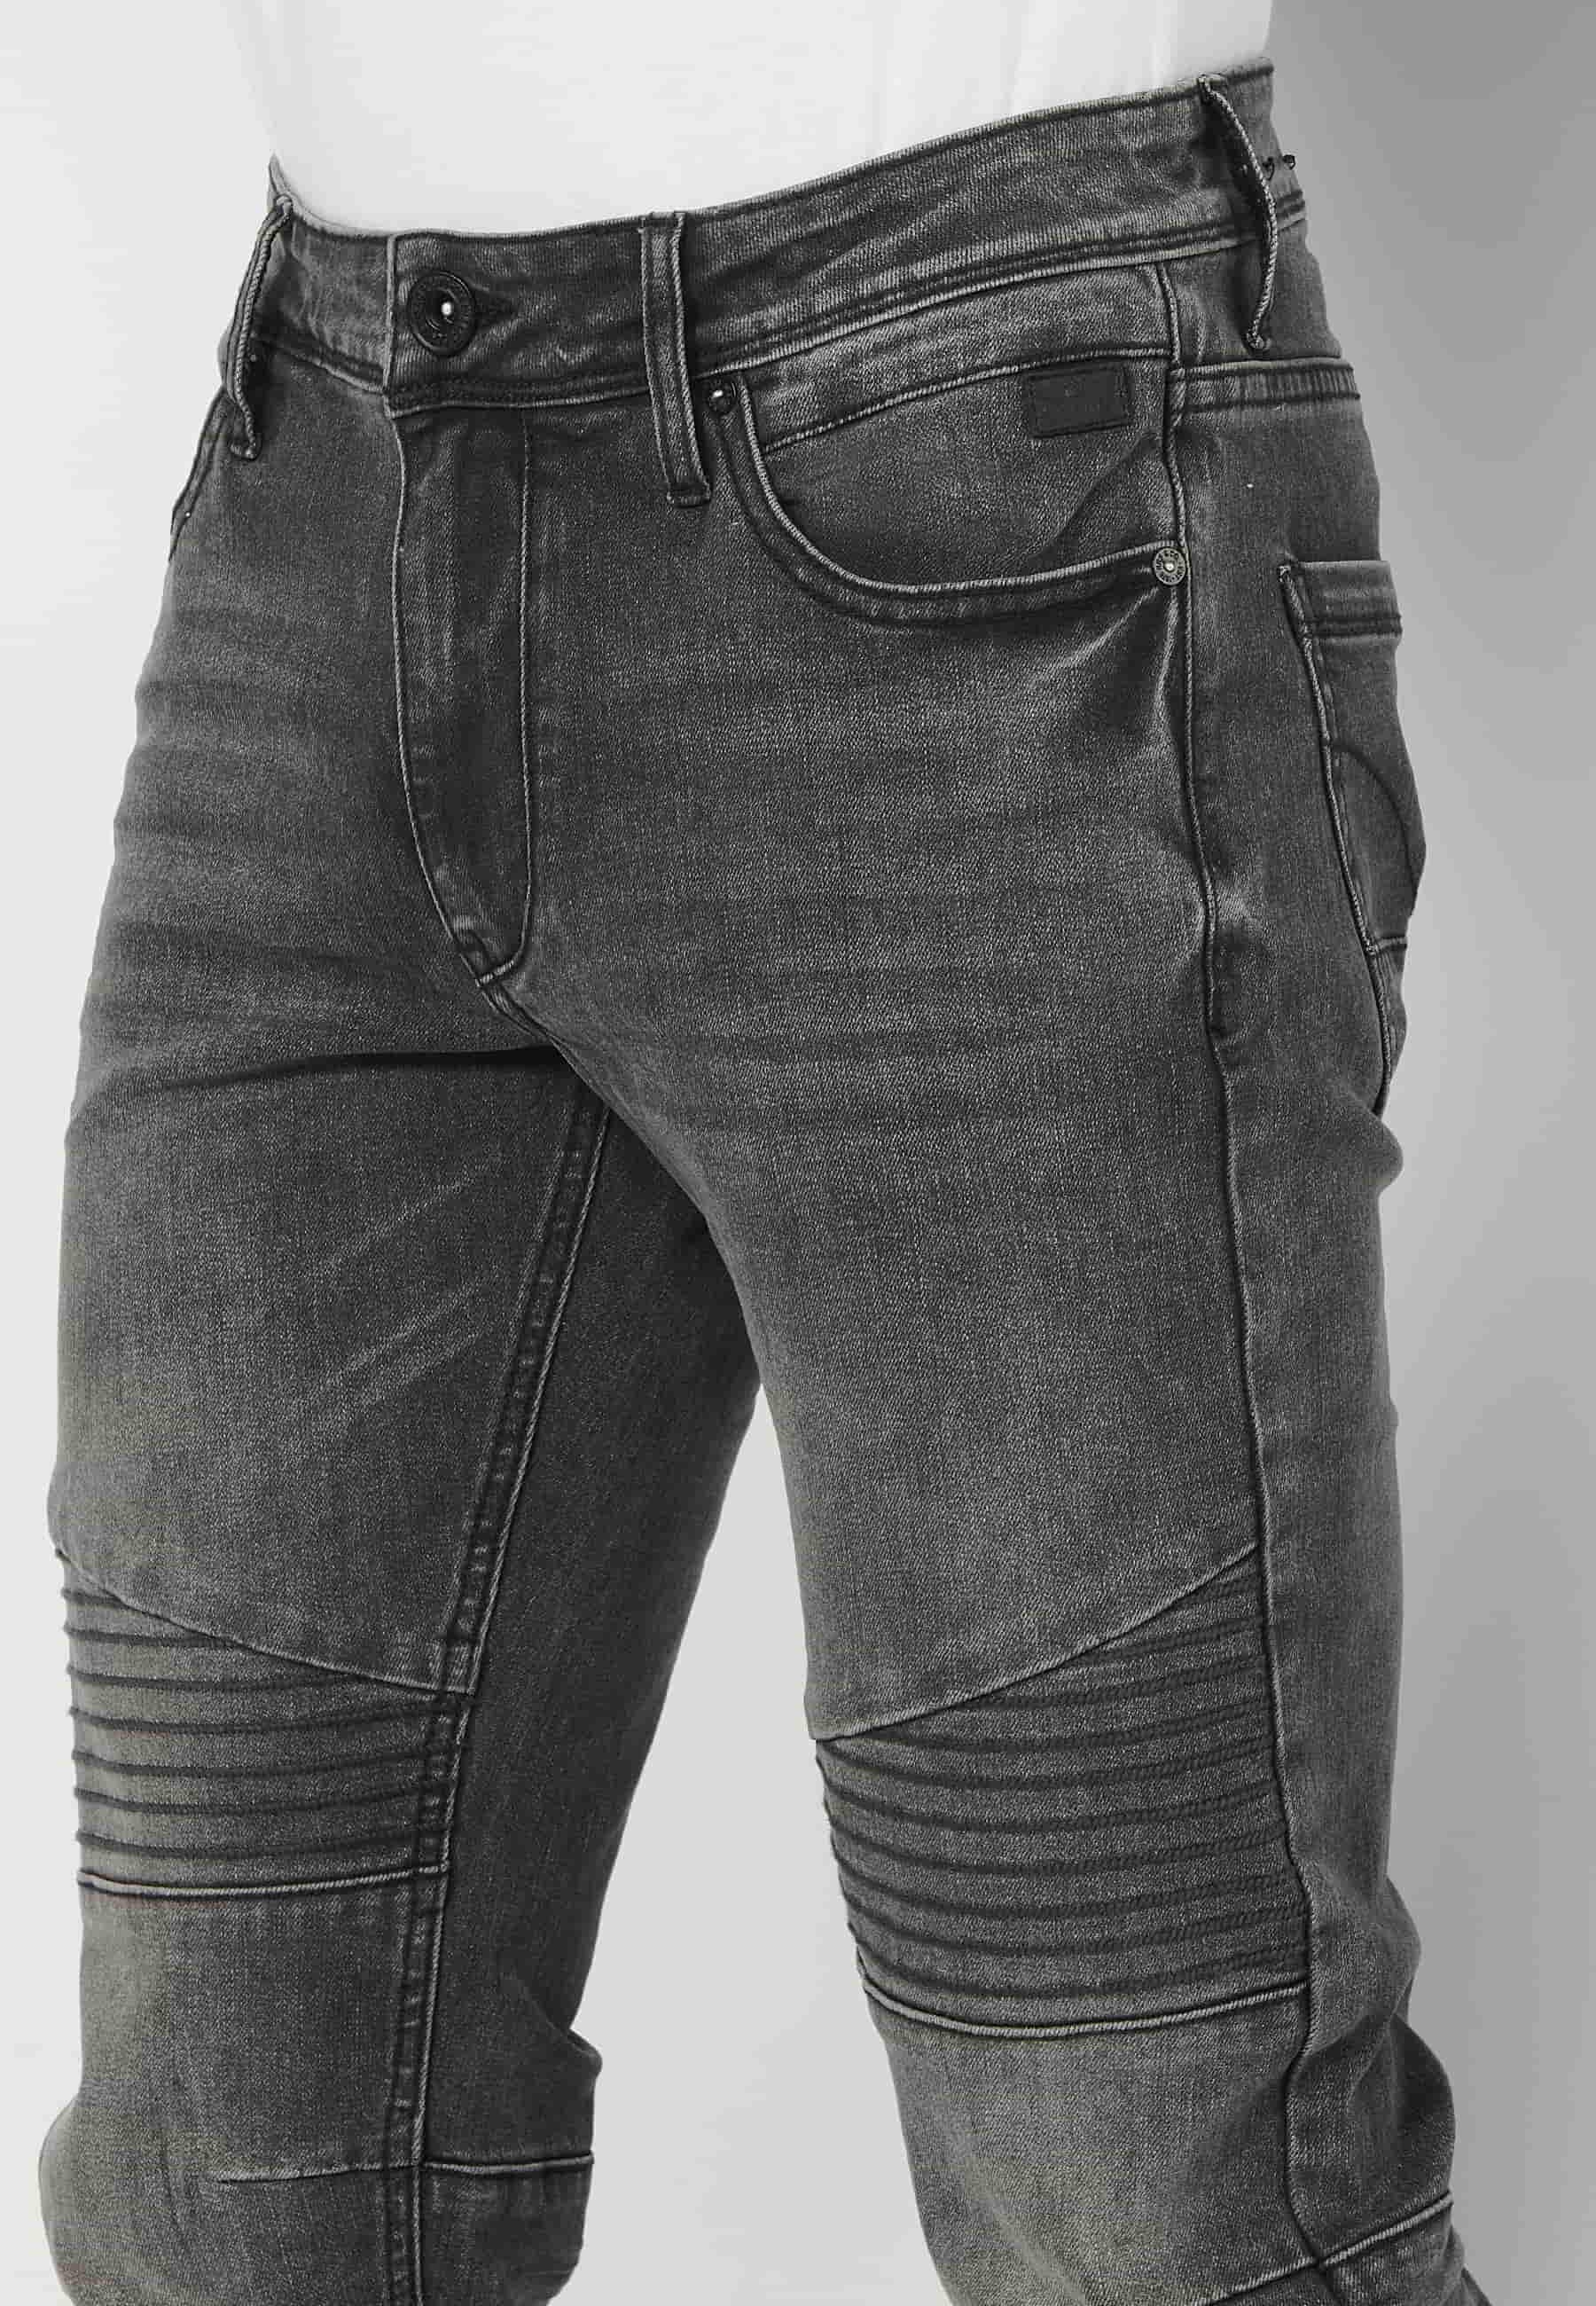 Long skinny fit pants, with five pockets, worn black color for Men 4